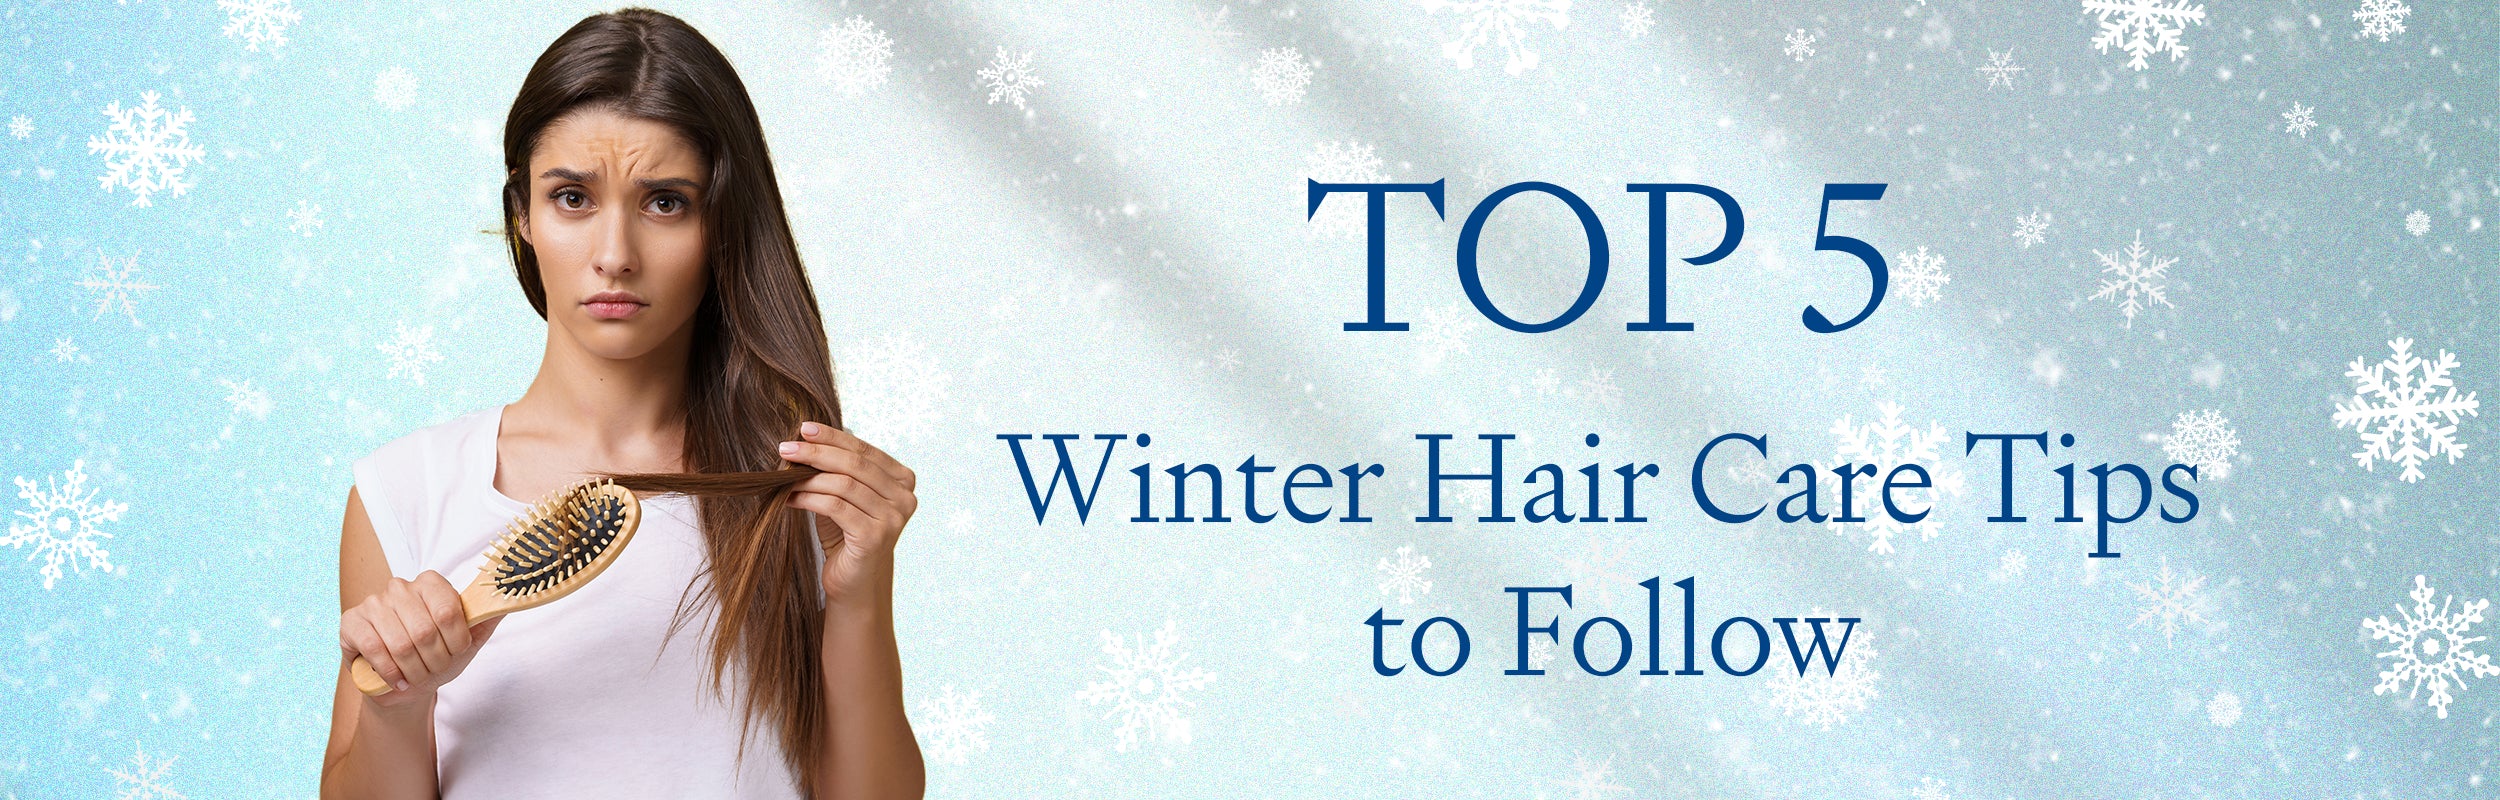 Top 5 Winter Hair Care Tips to Follow